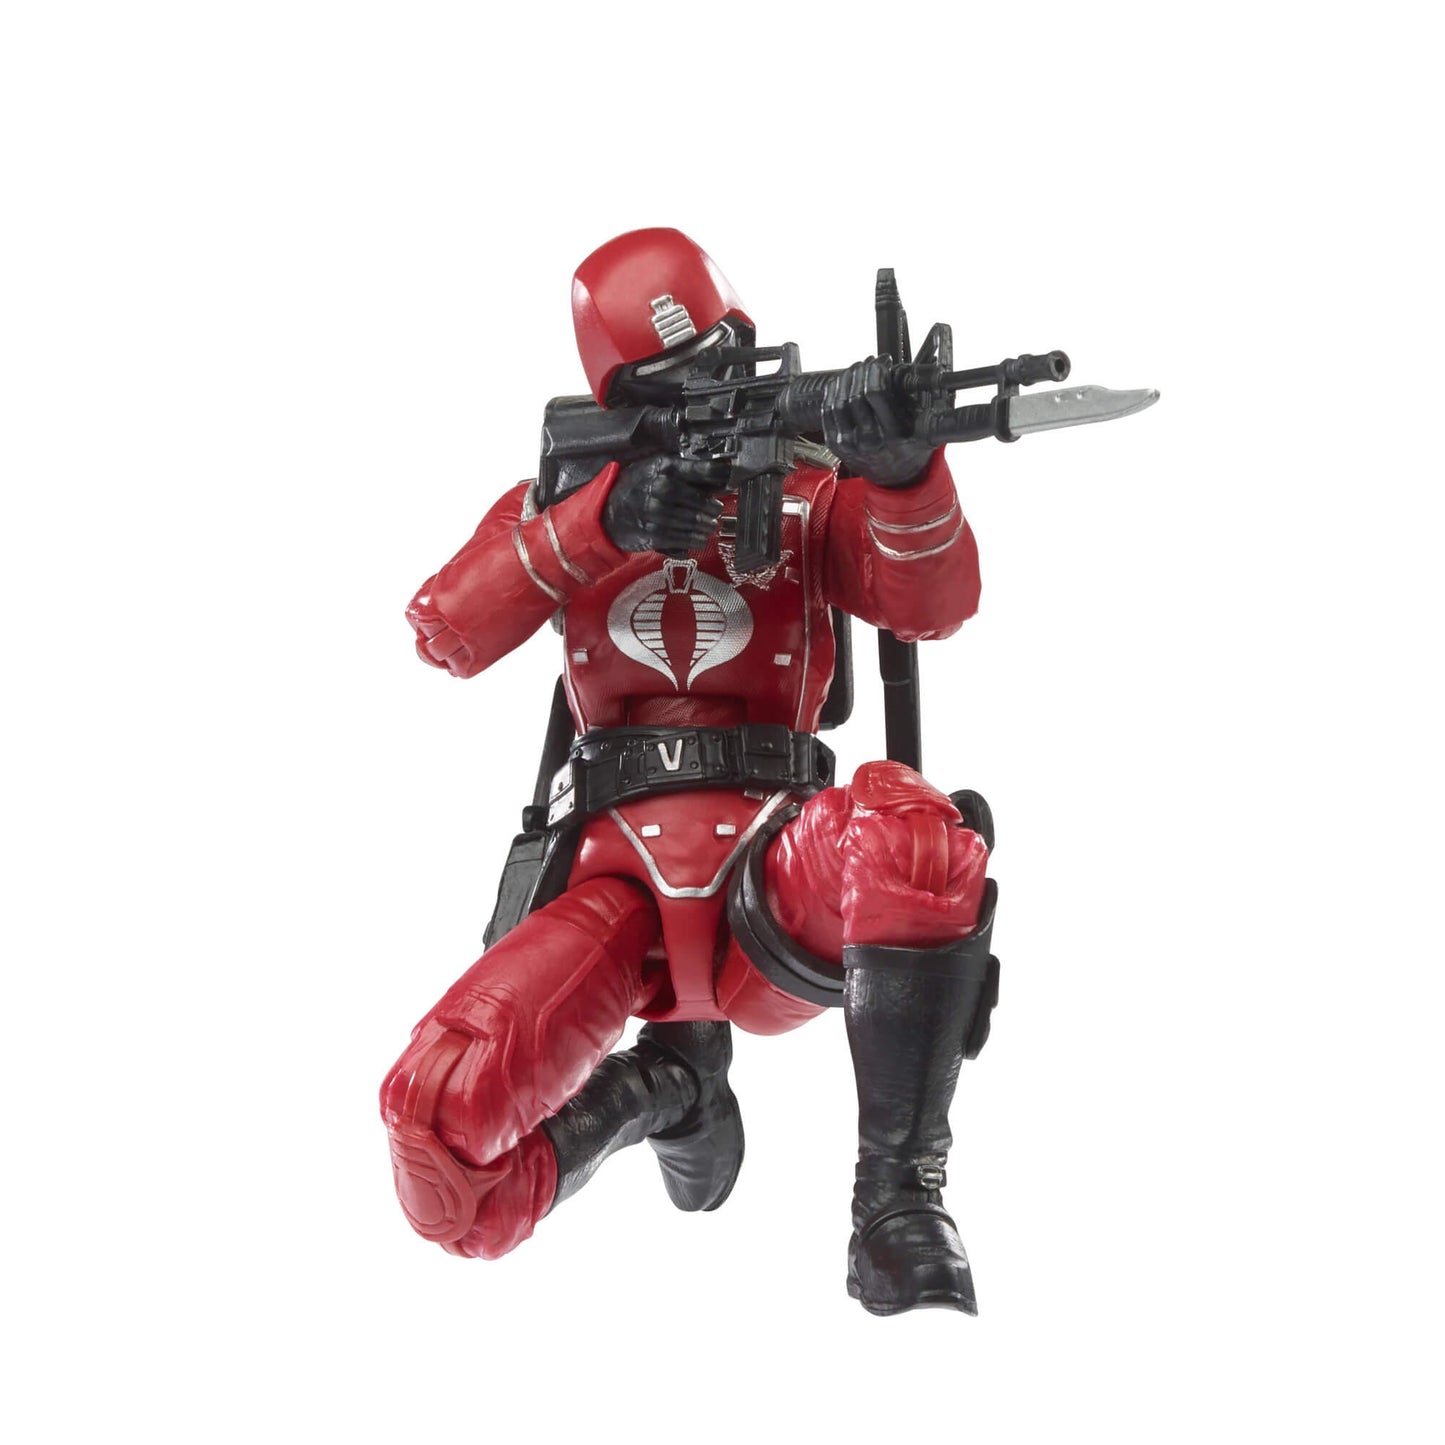 hasbro gi joe classified series cobra crimson guard action figure crouching pose aiming weapon